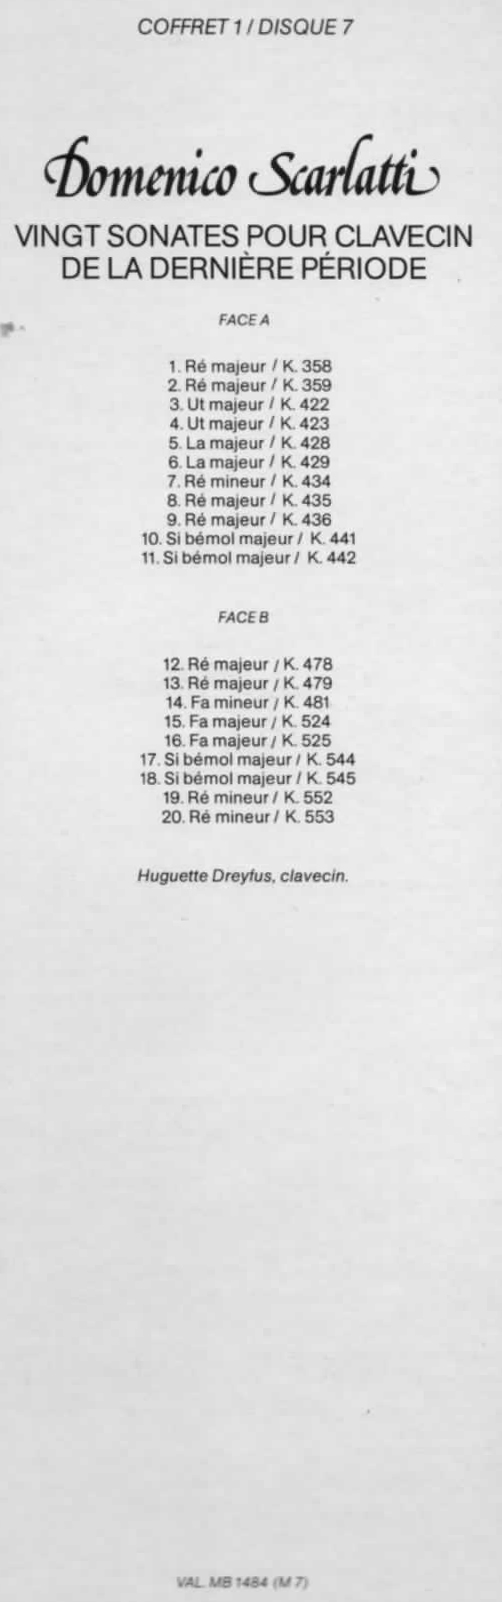 Domenico Scarlatti: discographie sélective - Page 5 Dreyfu10